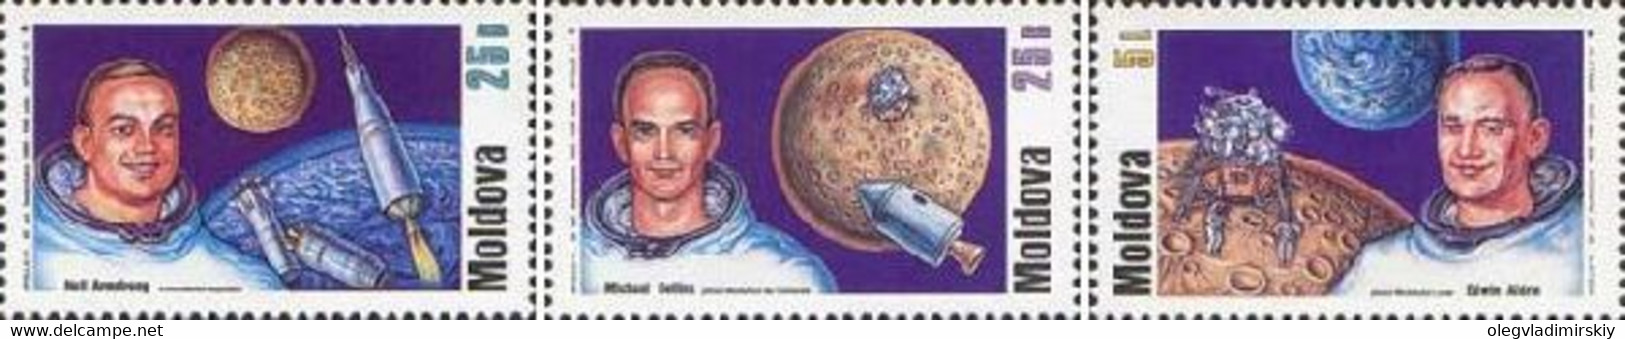 Moldavia Moldova 1999 30th Of The Moon Landing Set Of 3 Stamps - Etats-Unis